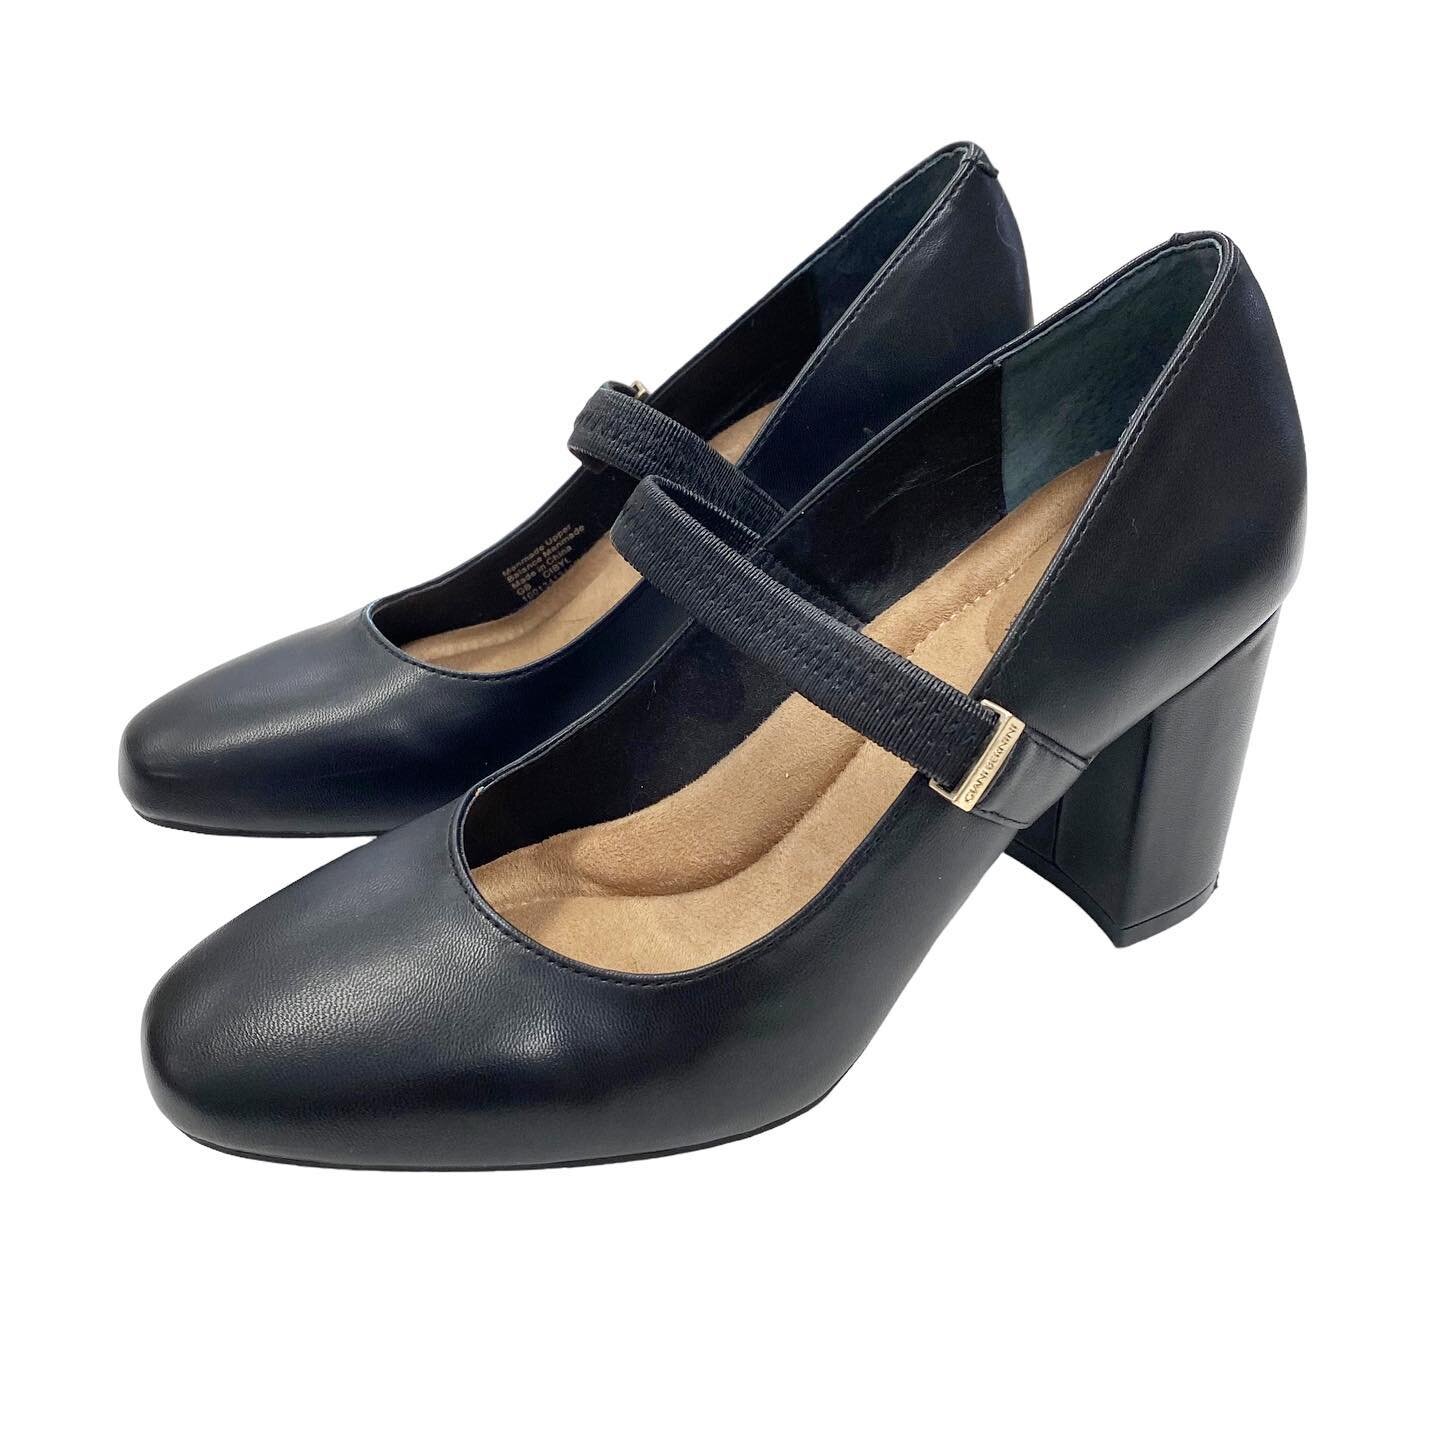 Giani Bernini Heels, Size 7, $34.95